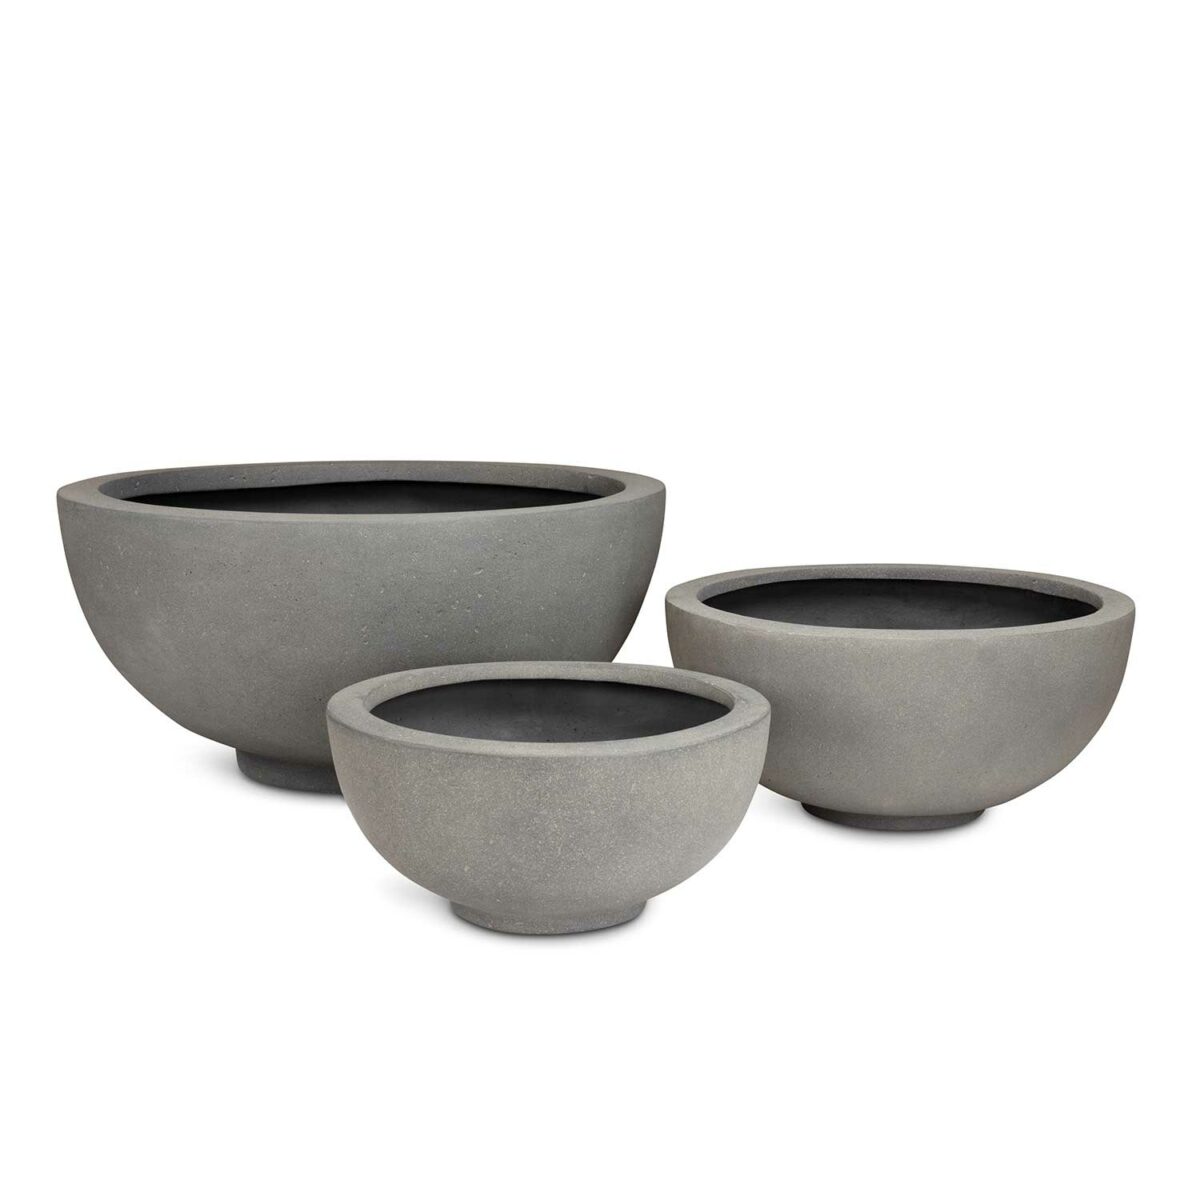 PLUS planter bowl gray